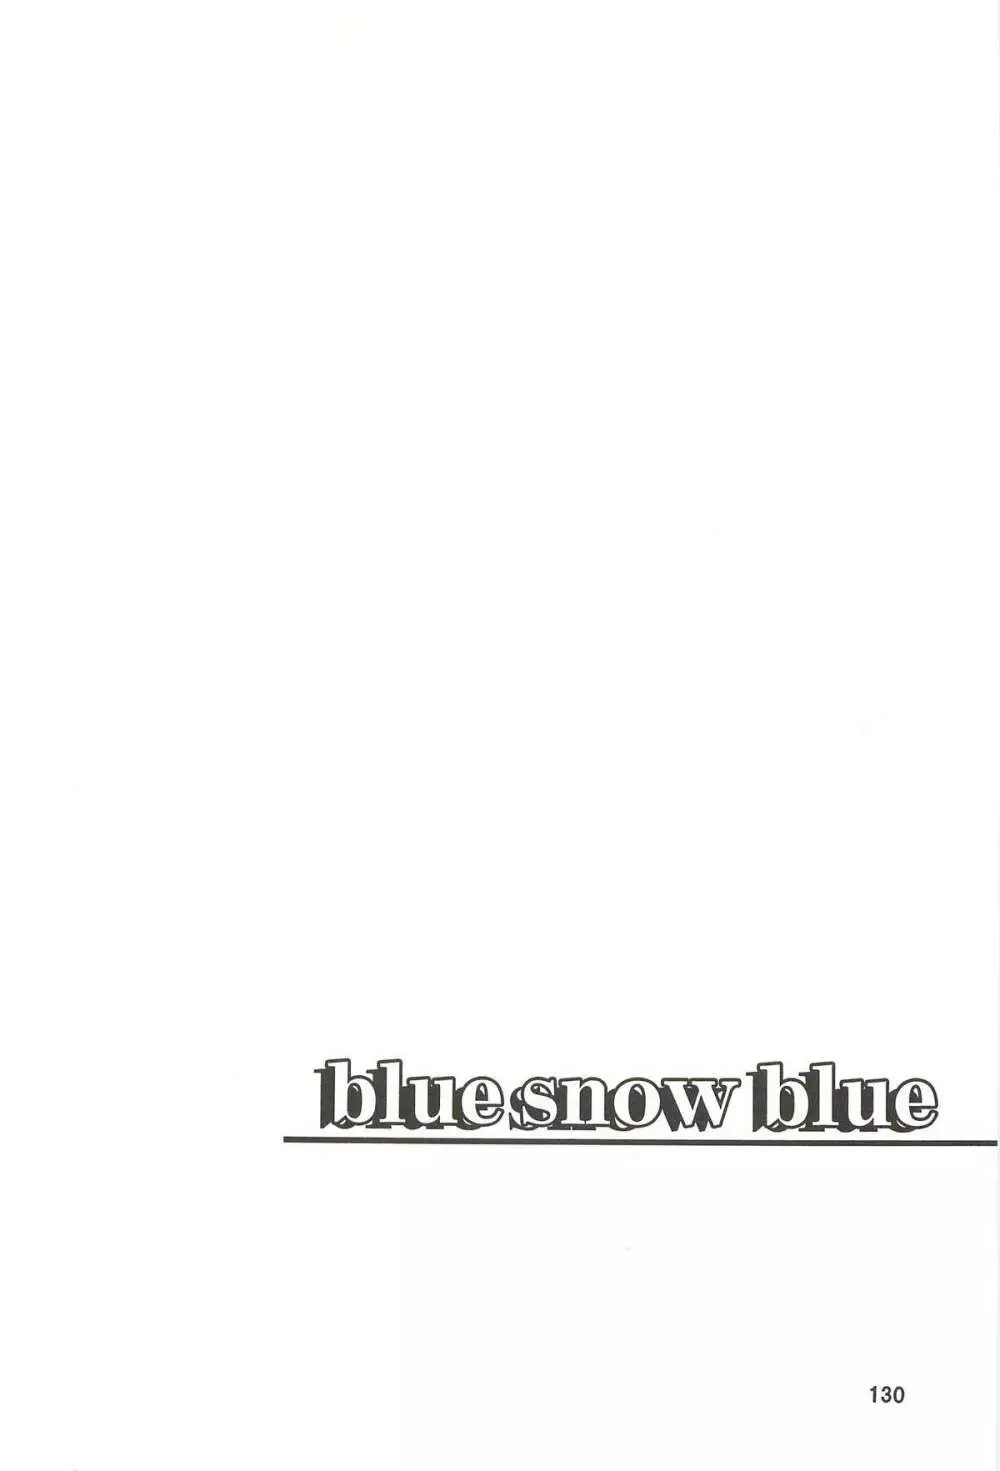 blue snow blue 総集編3 scene.7～scene.9 - page131